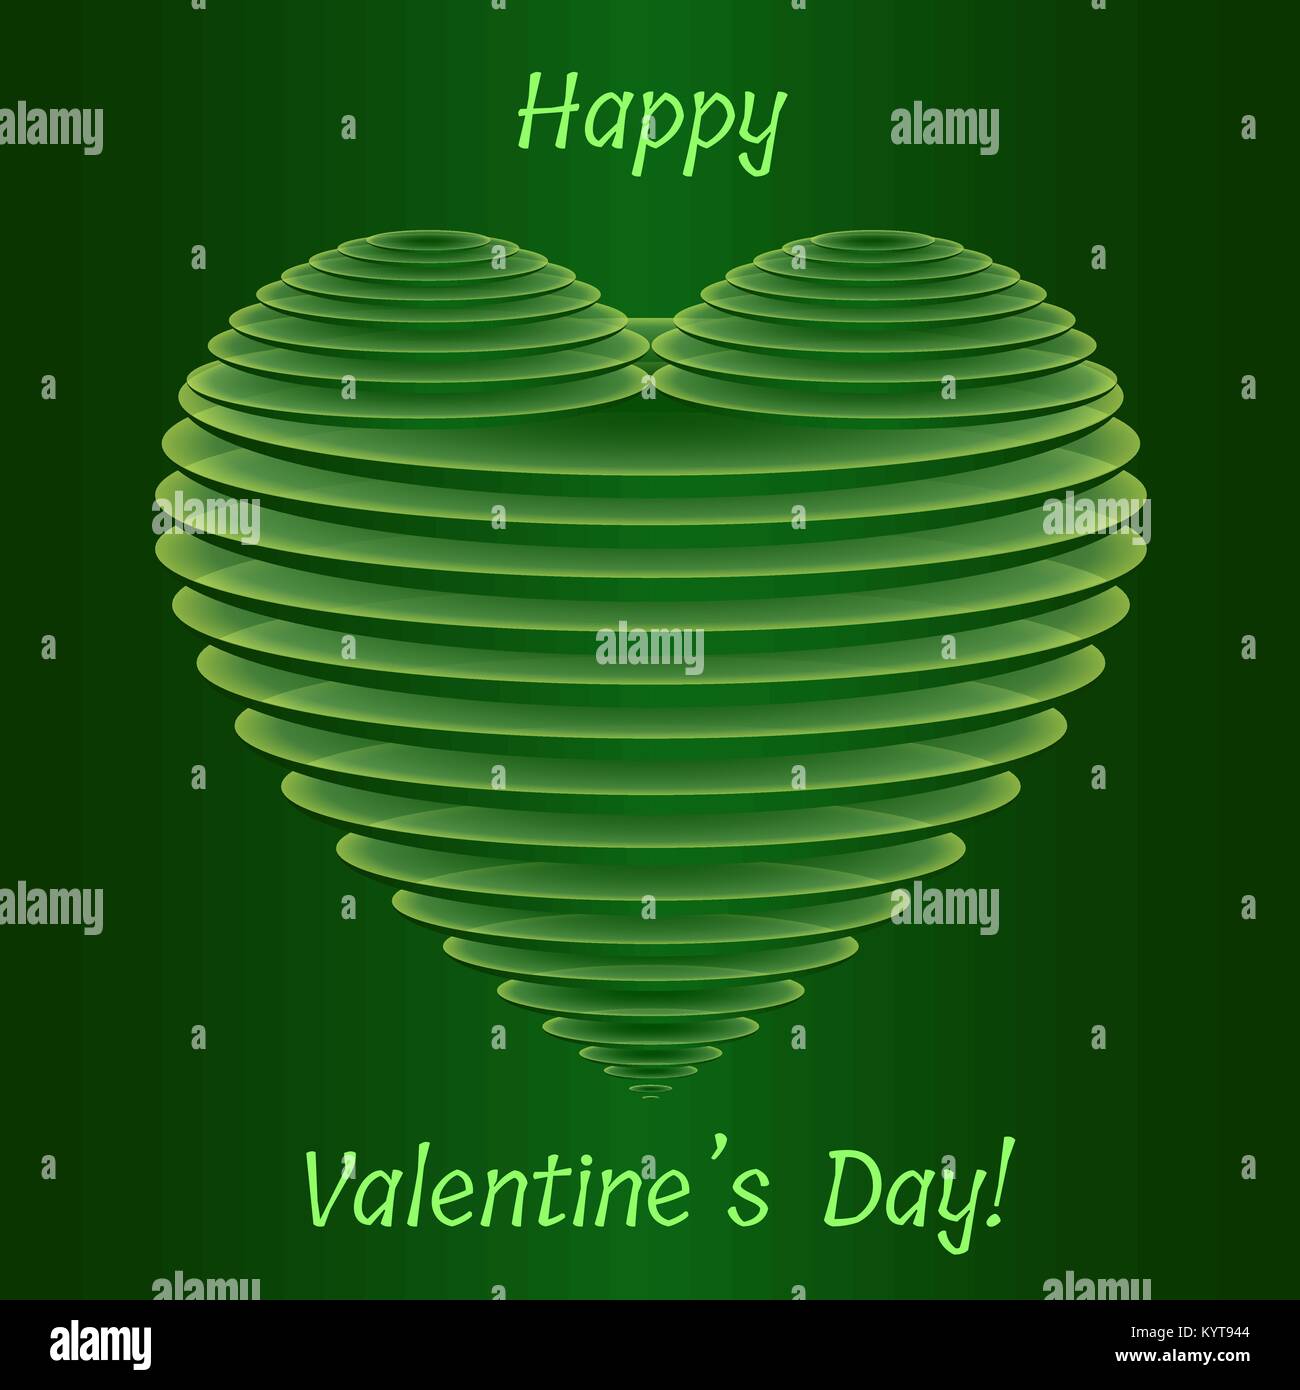 Stylish Valentine's 3D green heart shape of thin semi transparent oval plates. Creative vector illustration Stock Vector